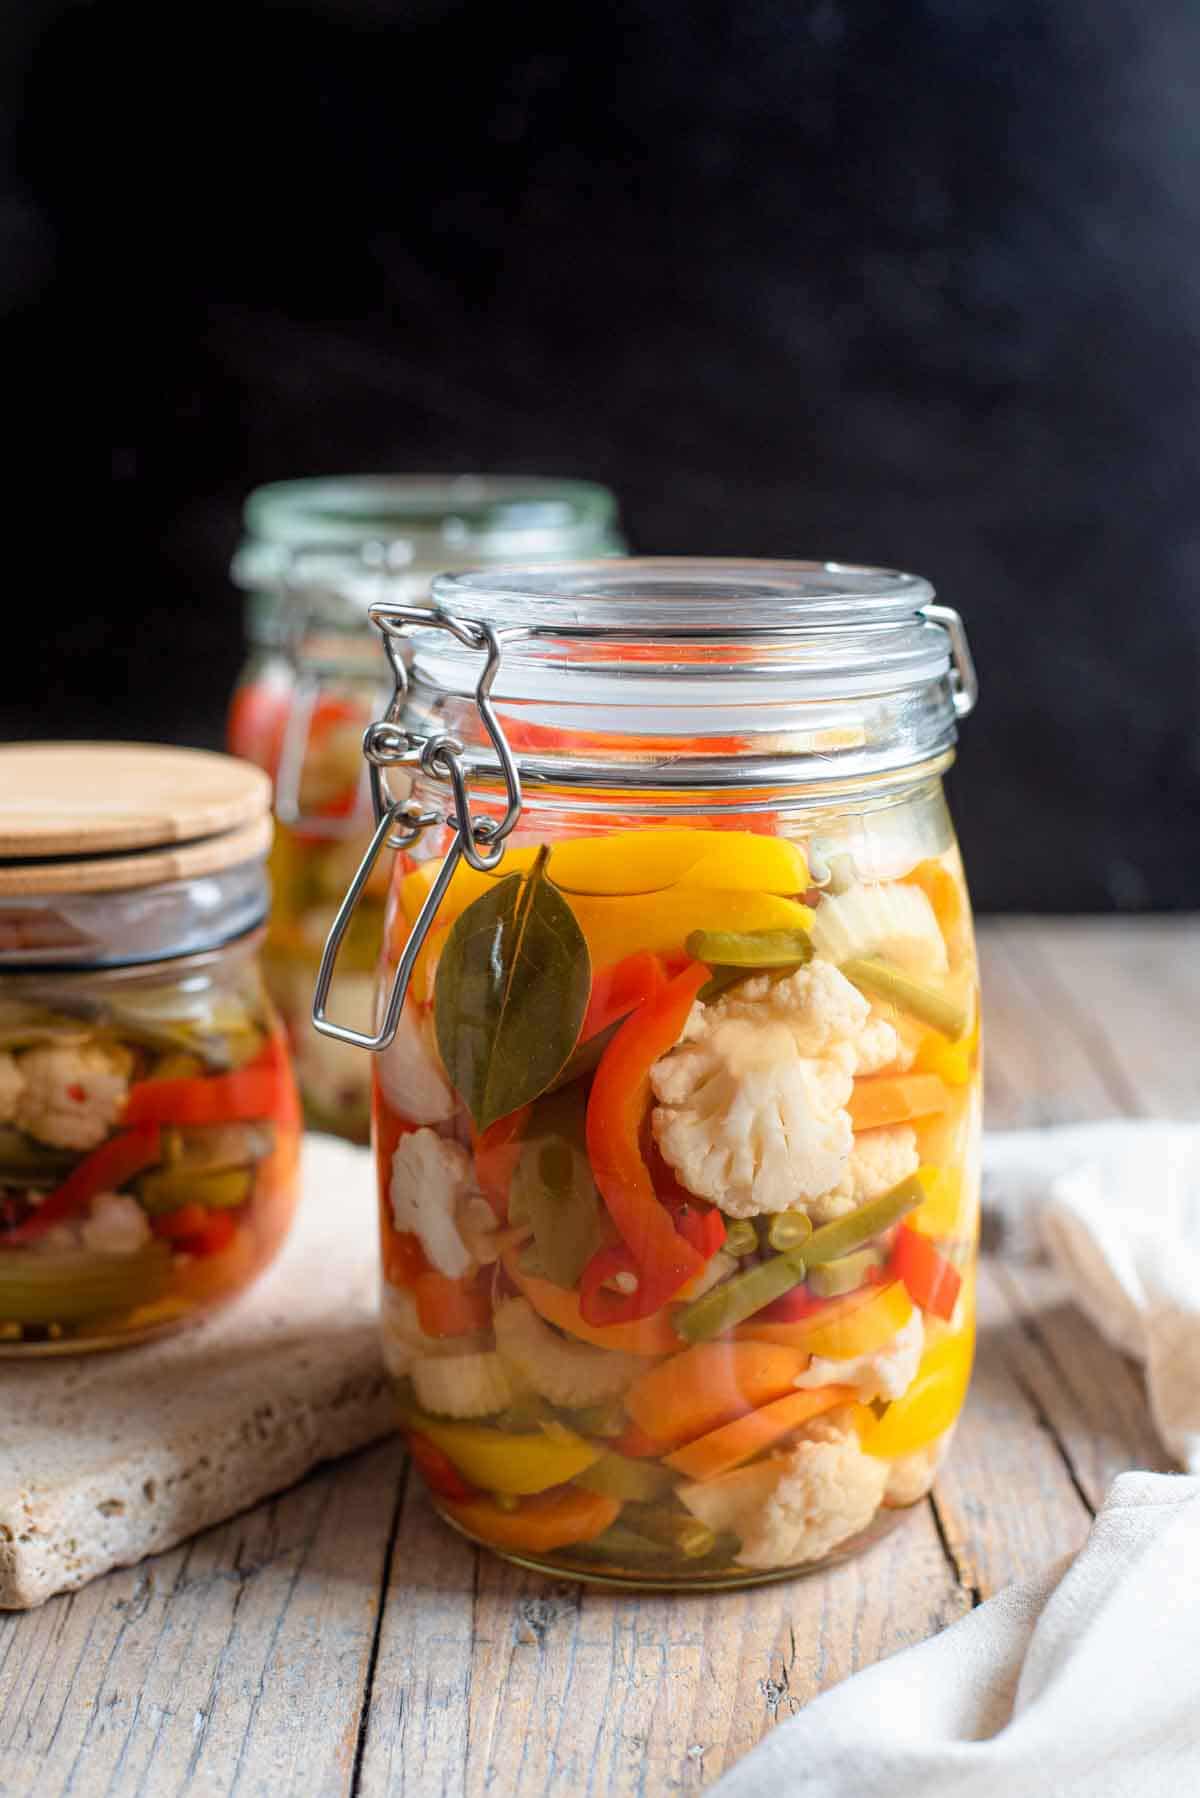 A close up of a jar of pickled vegetables